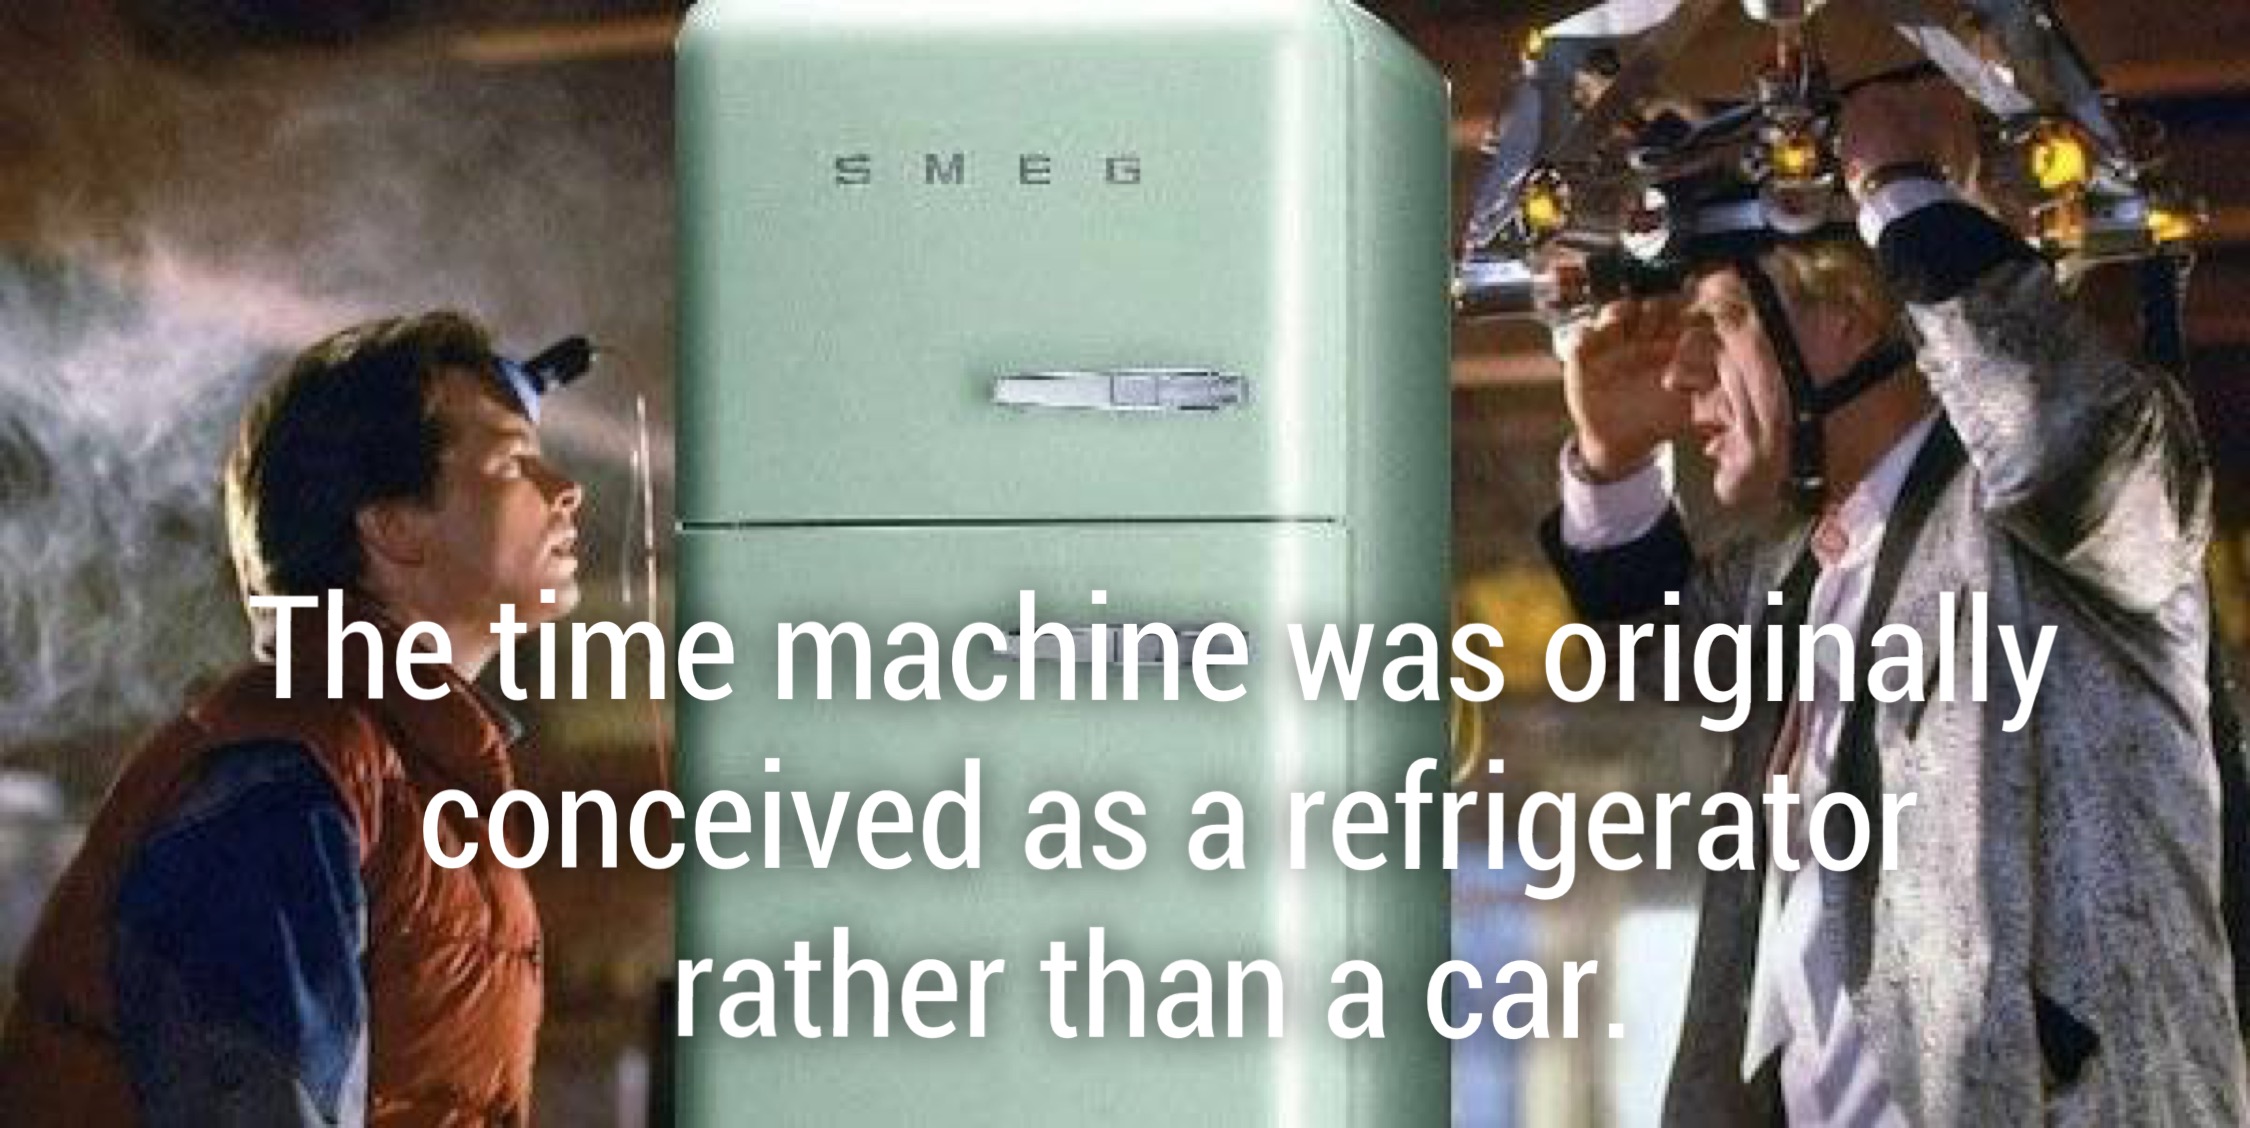 back to the future movie - Smeg The time machine was originally conceived as a refrigerato rather than a car